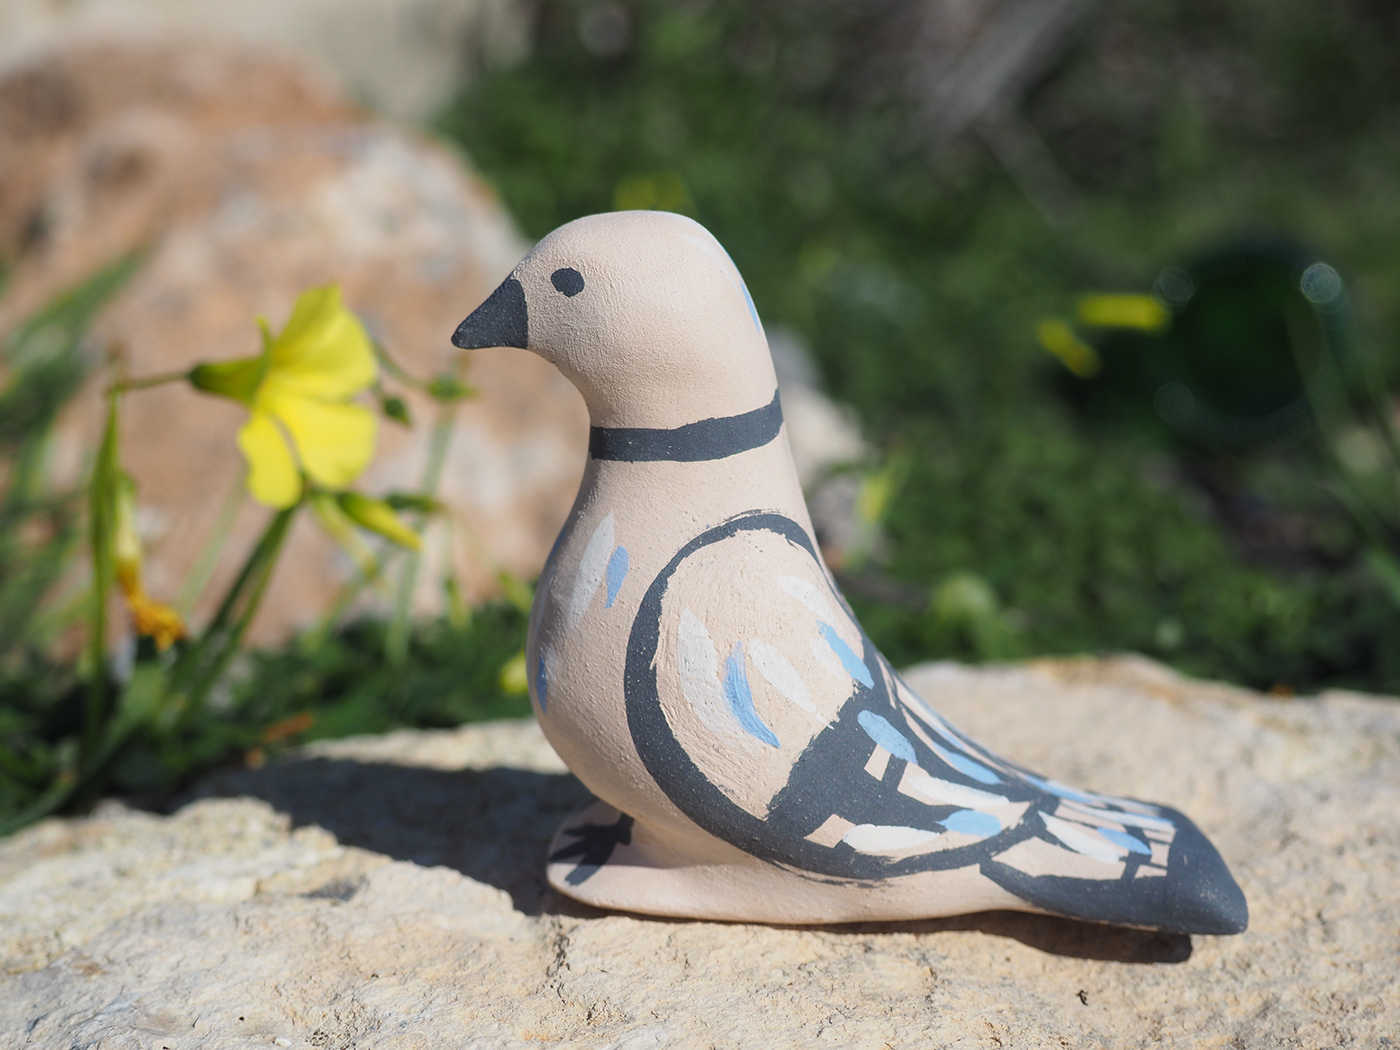 sculpture clay ceramics  handmade bird microsculpture handpainting